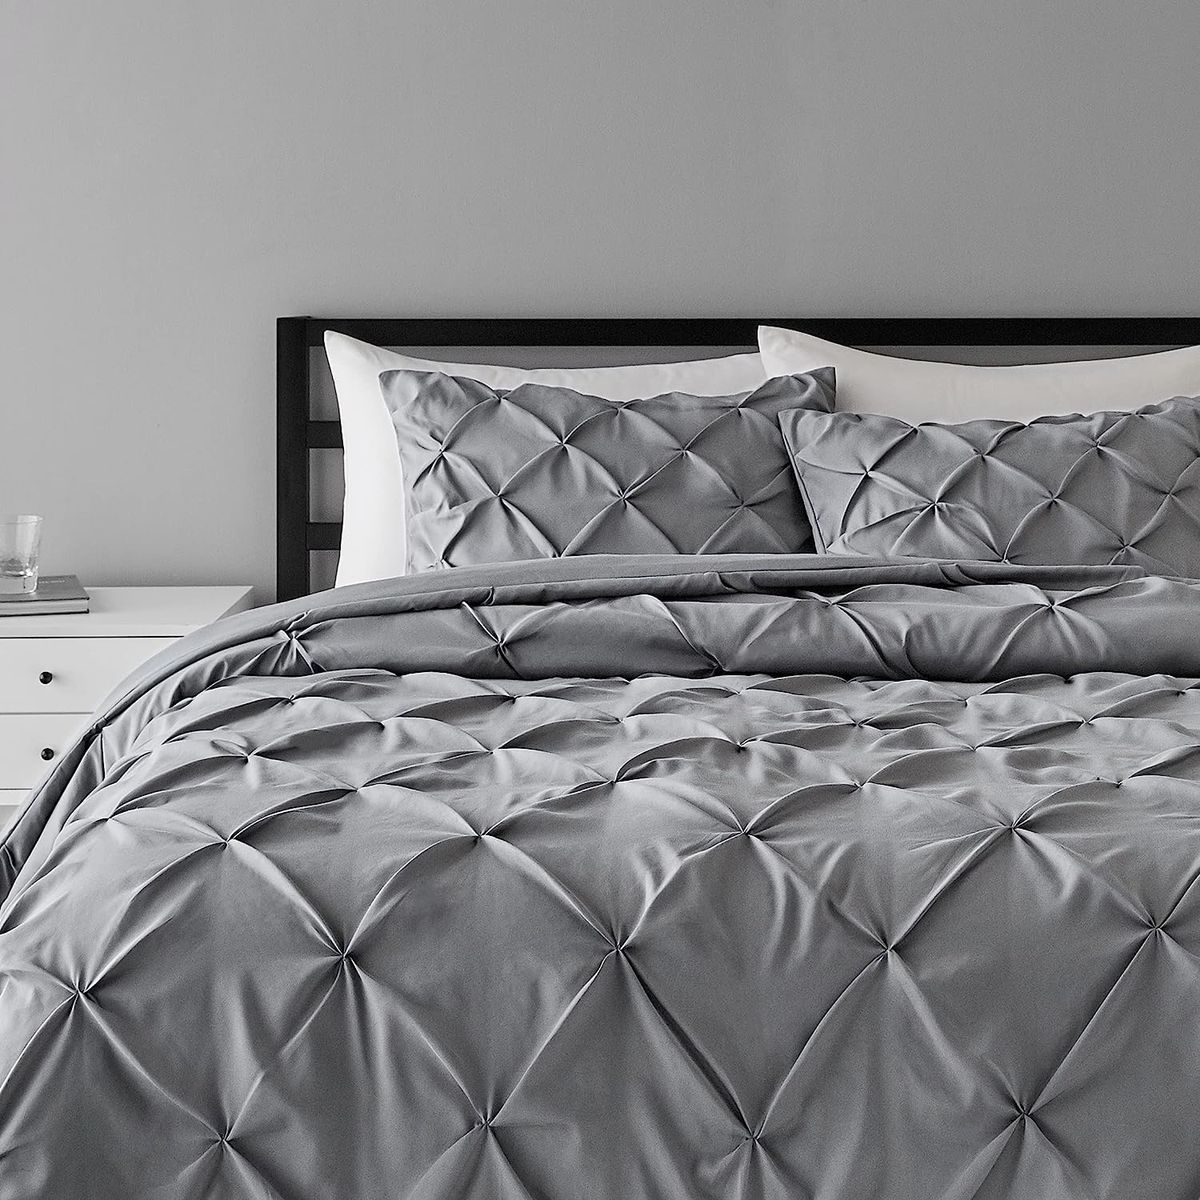 Photos - Bed Linen Amazon Basics Lightweight Microfiber Pinch-Pleated Duvet Cover Set by Amaz